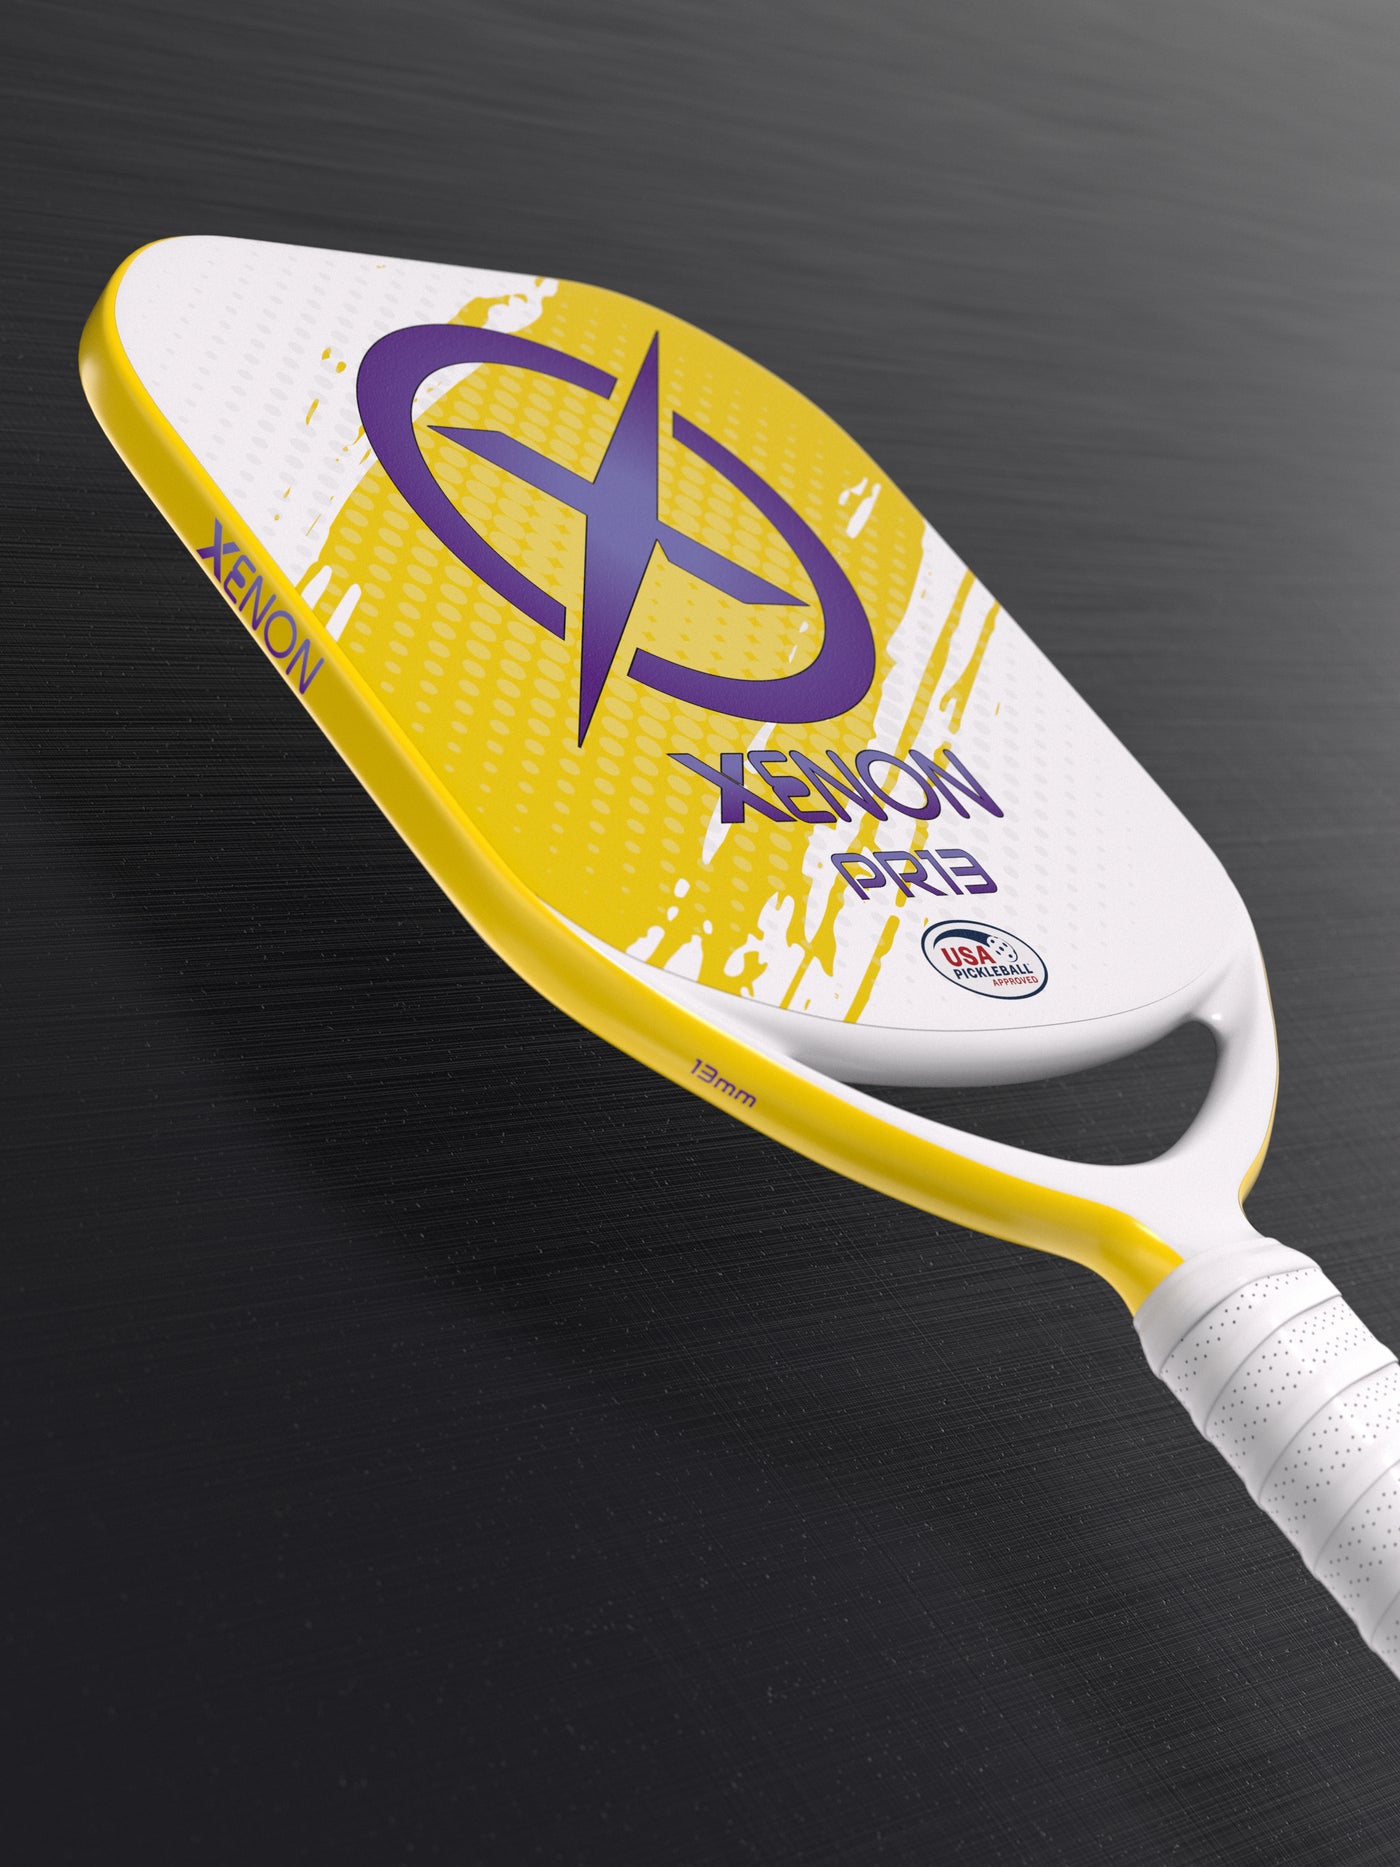 Xenon PR13 pickleball paddle